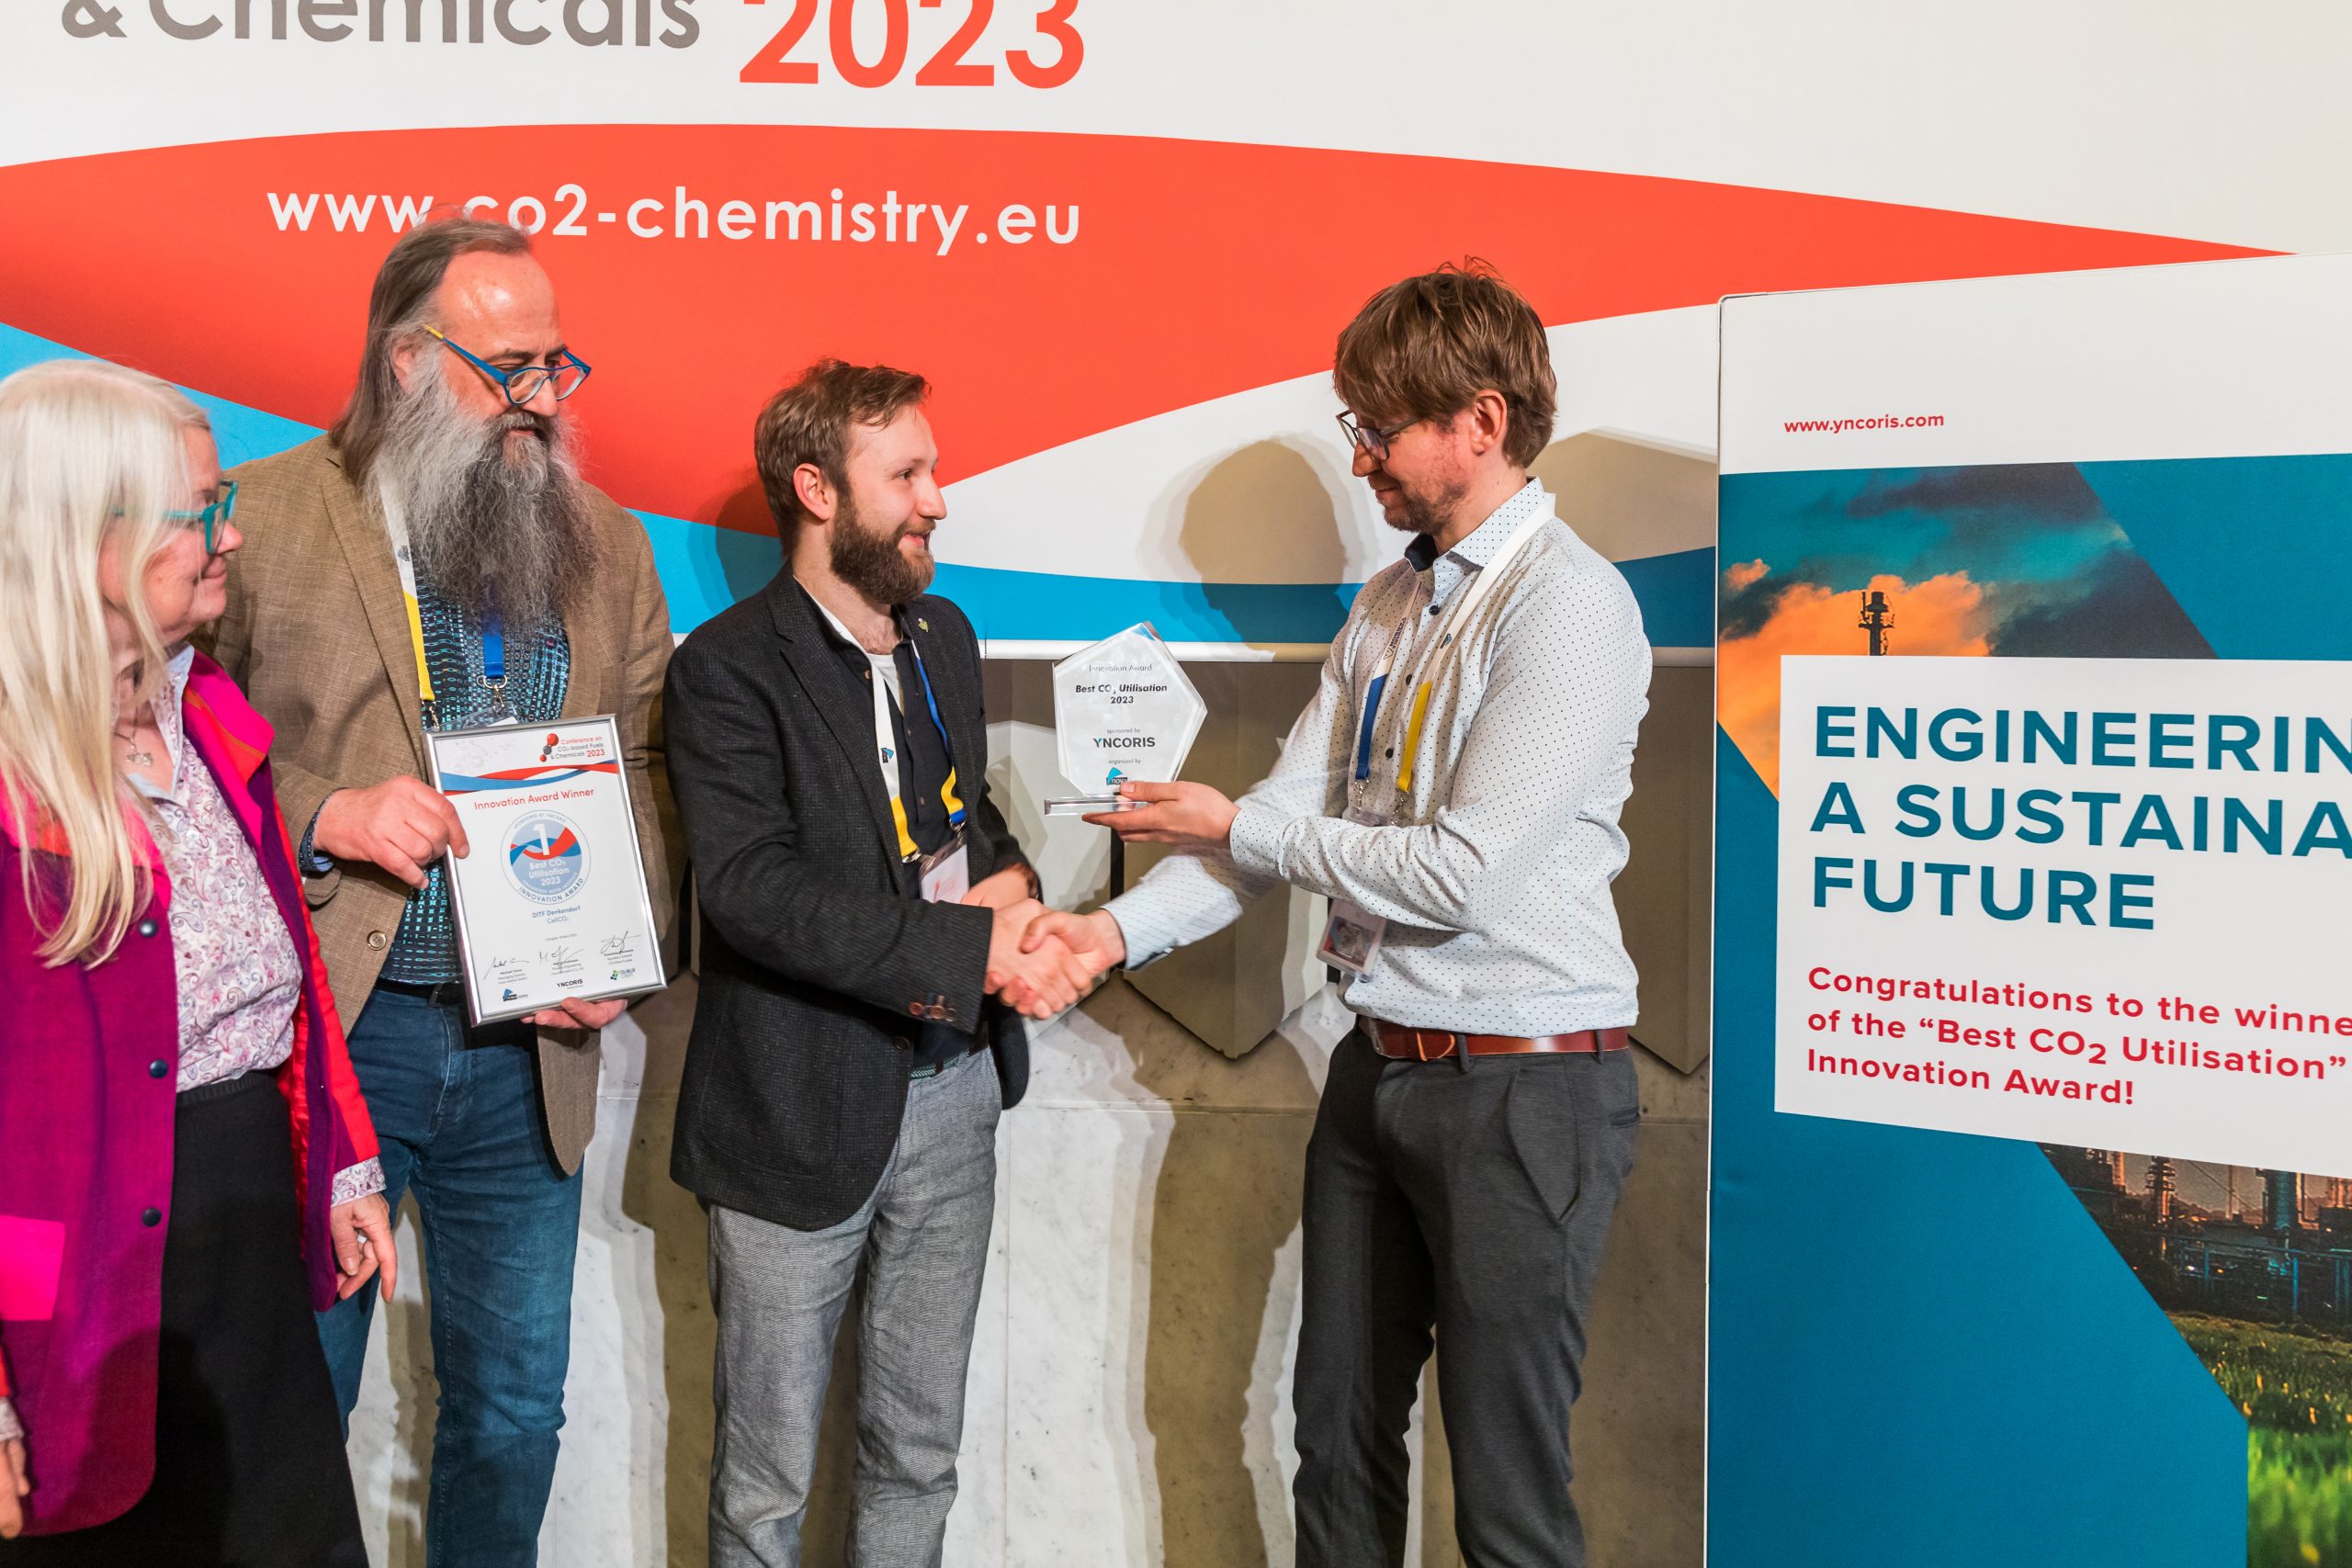 Gewinner des Best CO₂ Utilisation 2023 Award v.l.n.r. Asta Partanen (nova-Institut), Michael Carus (nova-Institut), Marc Philipp Vocht (DITF), Martin Lindmeyer (Yncoris)